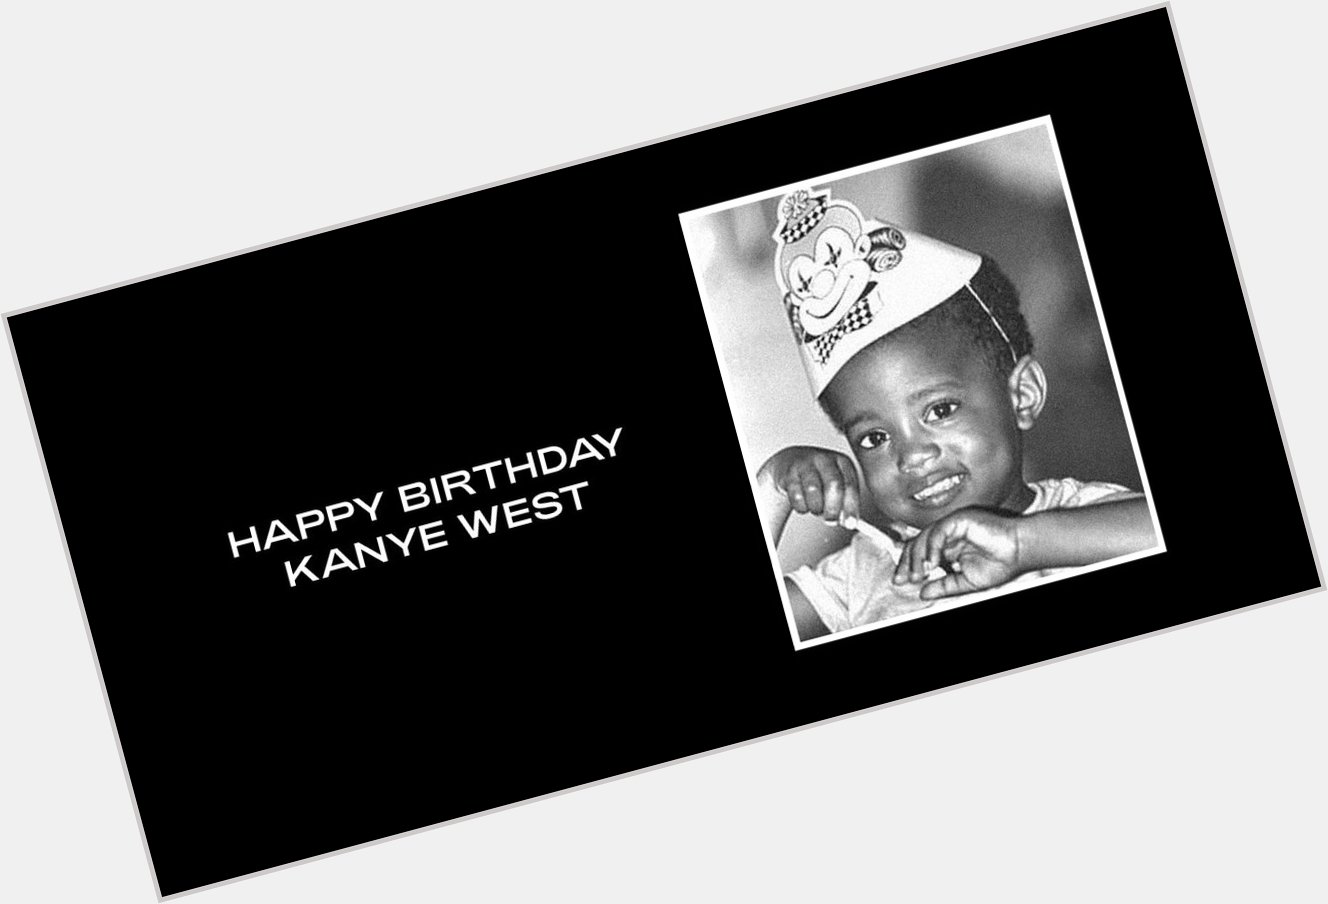  Happy Birthday Kanye West, Sasha Obama & Faith Evans  